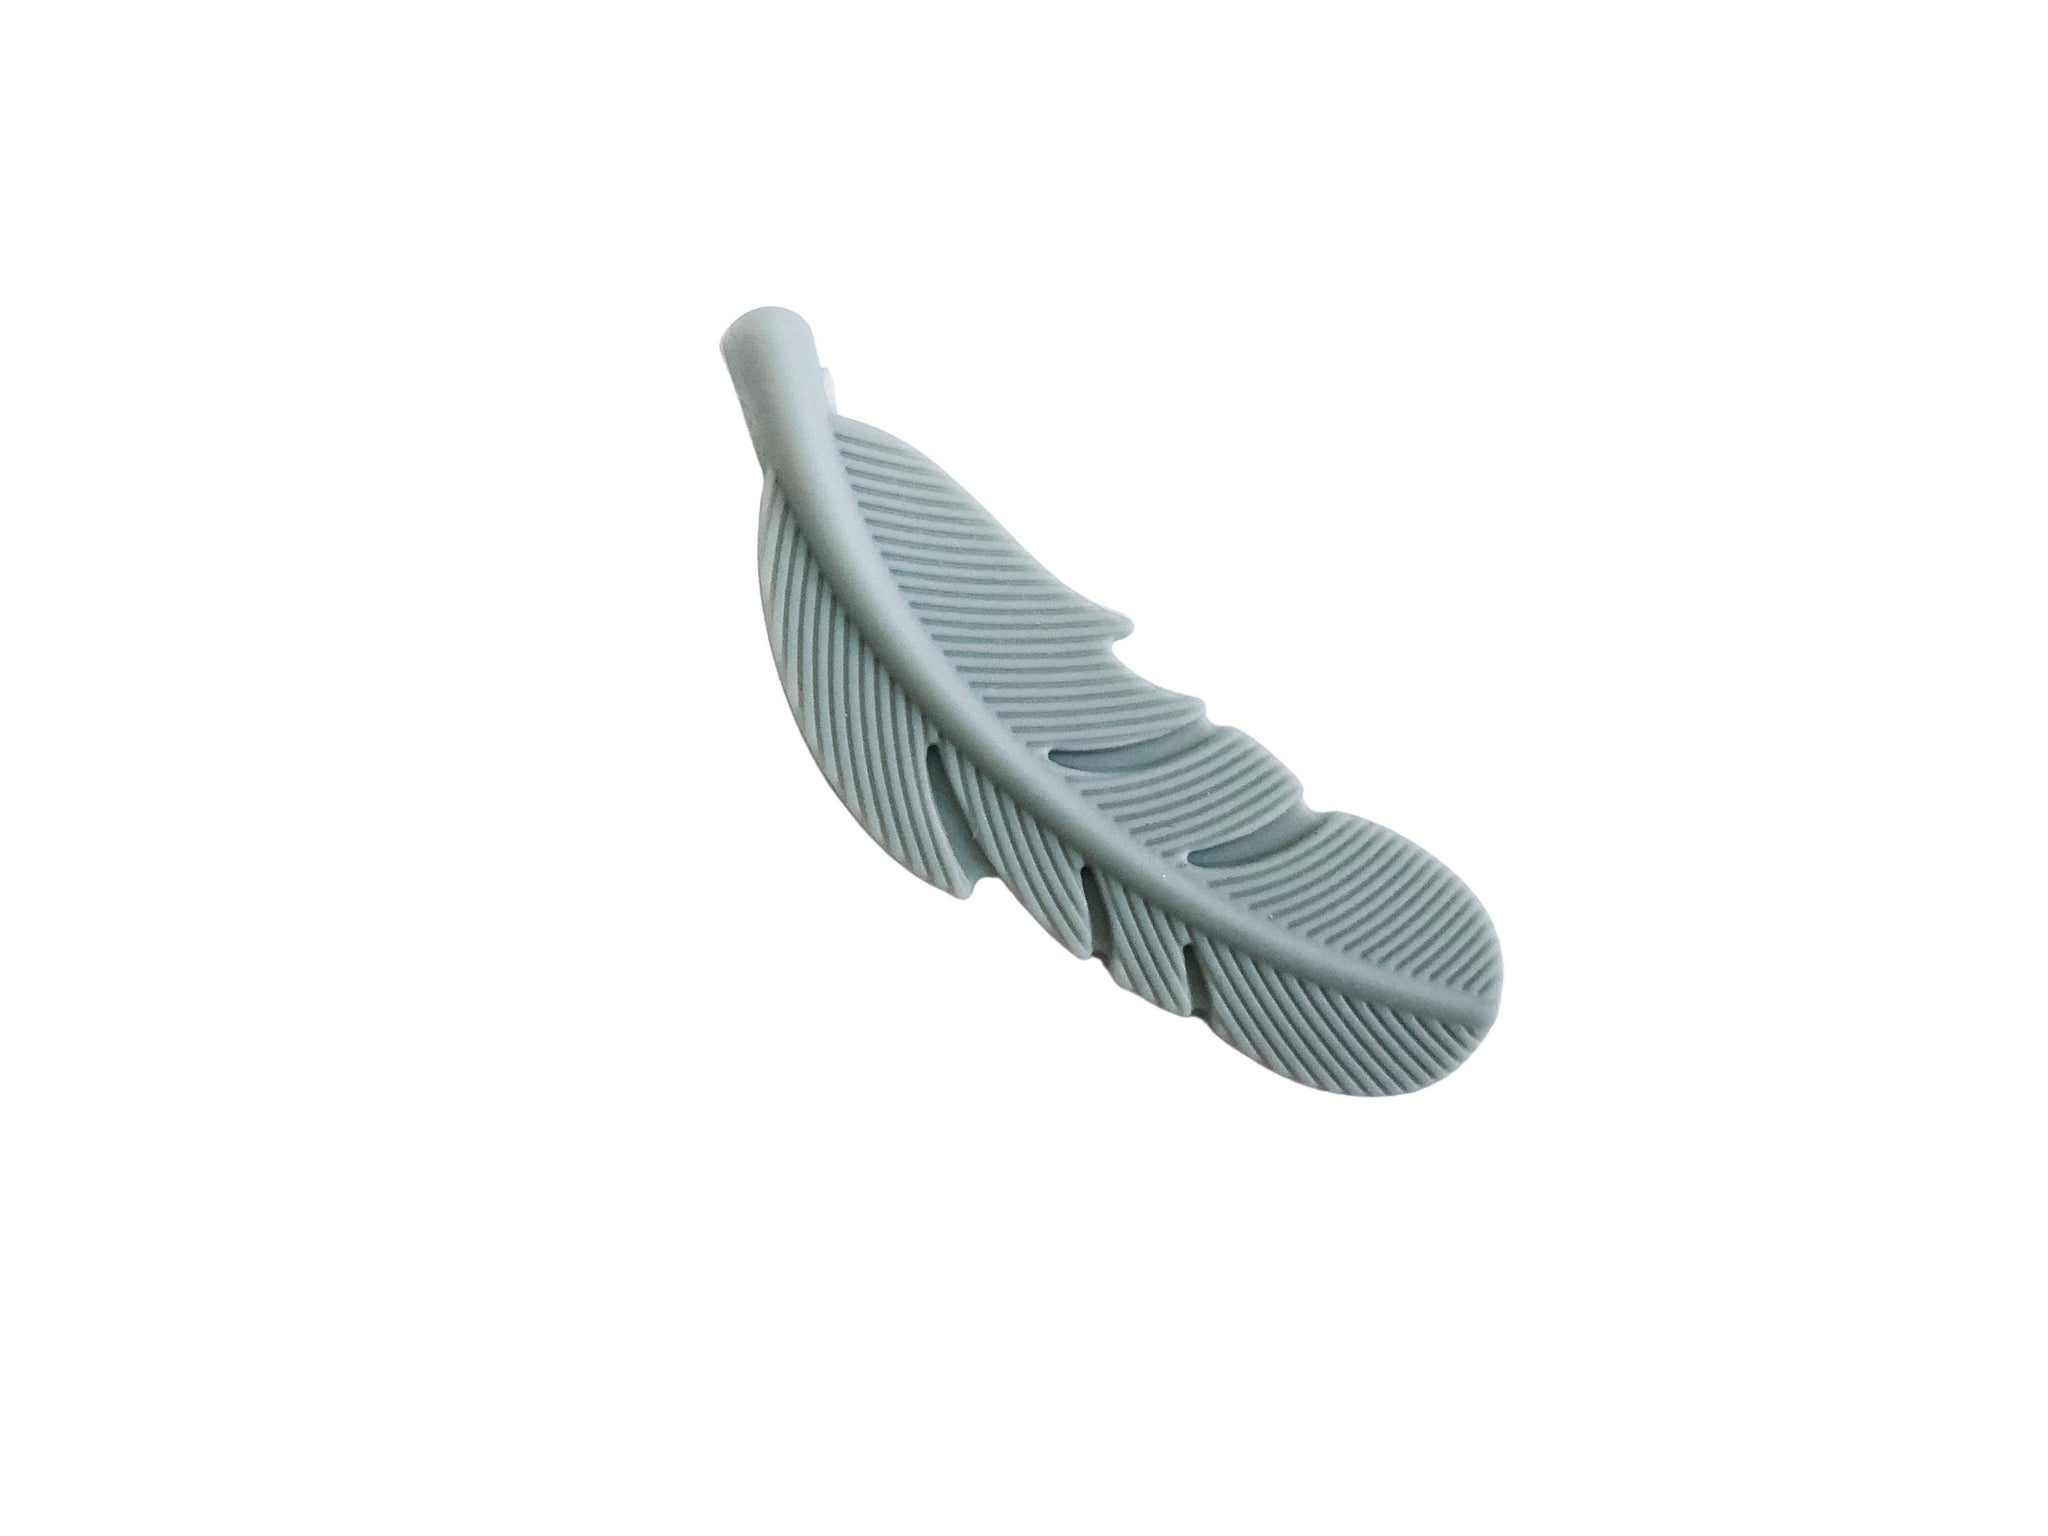 Shark Silicone Feather Pendant Beads - Light Grey - Bulk Silicone Beads Wholesale - DIY Jewelry